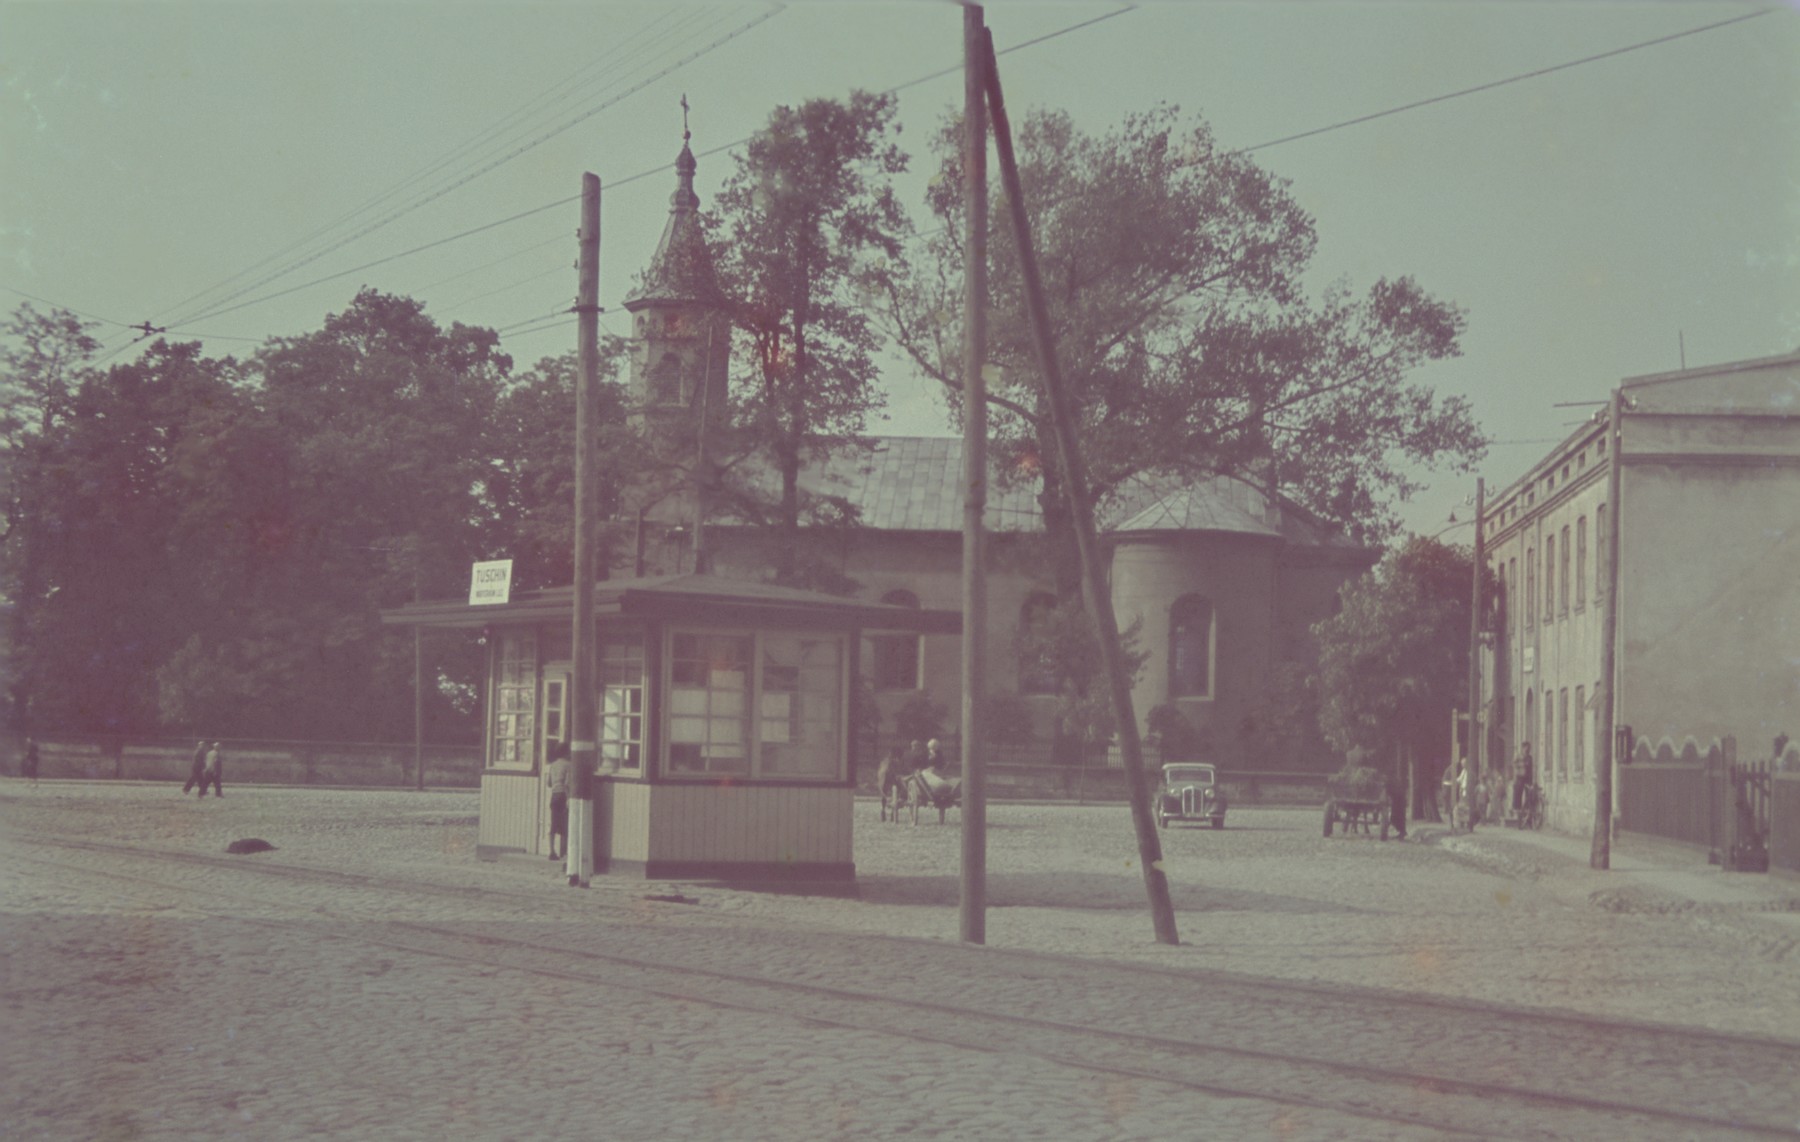 A street scene in Tuszyn.

Original German caption: "Tuschyn", #111.